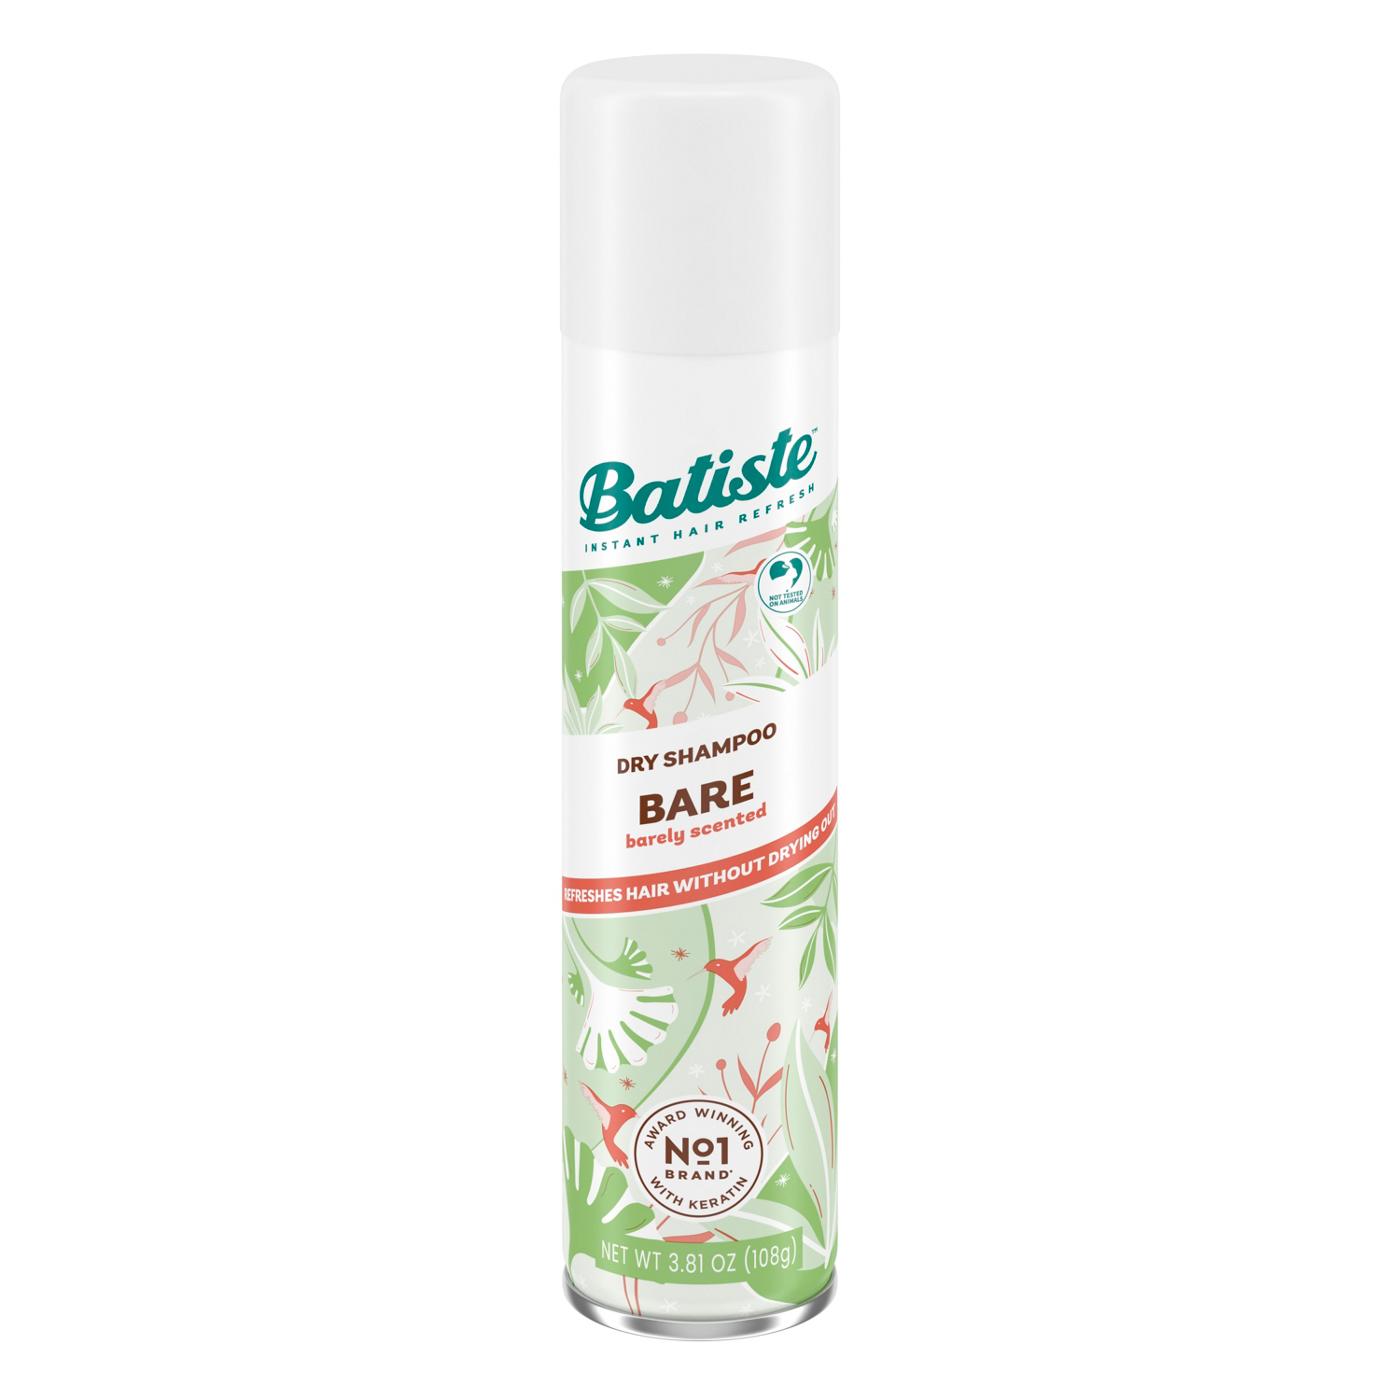 Batiste Dry Shampoo - Bare; image 1 of 2